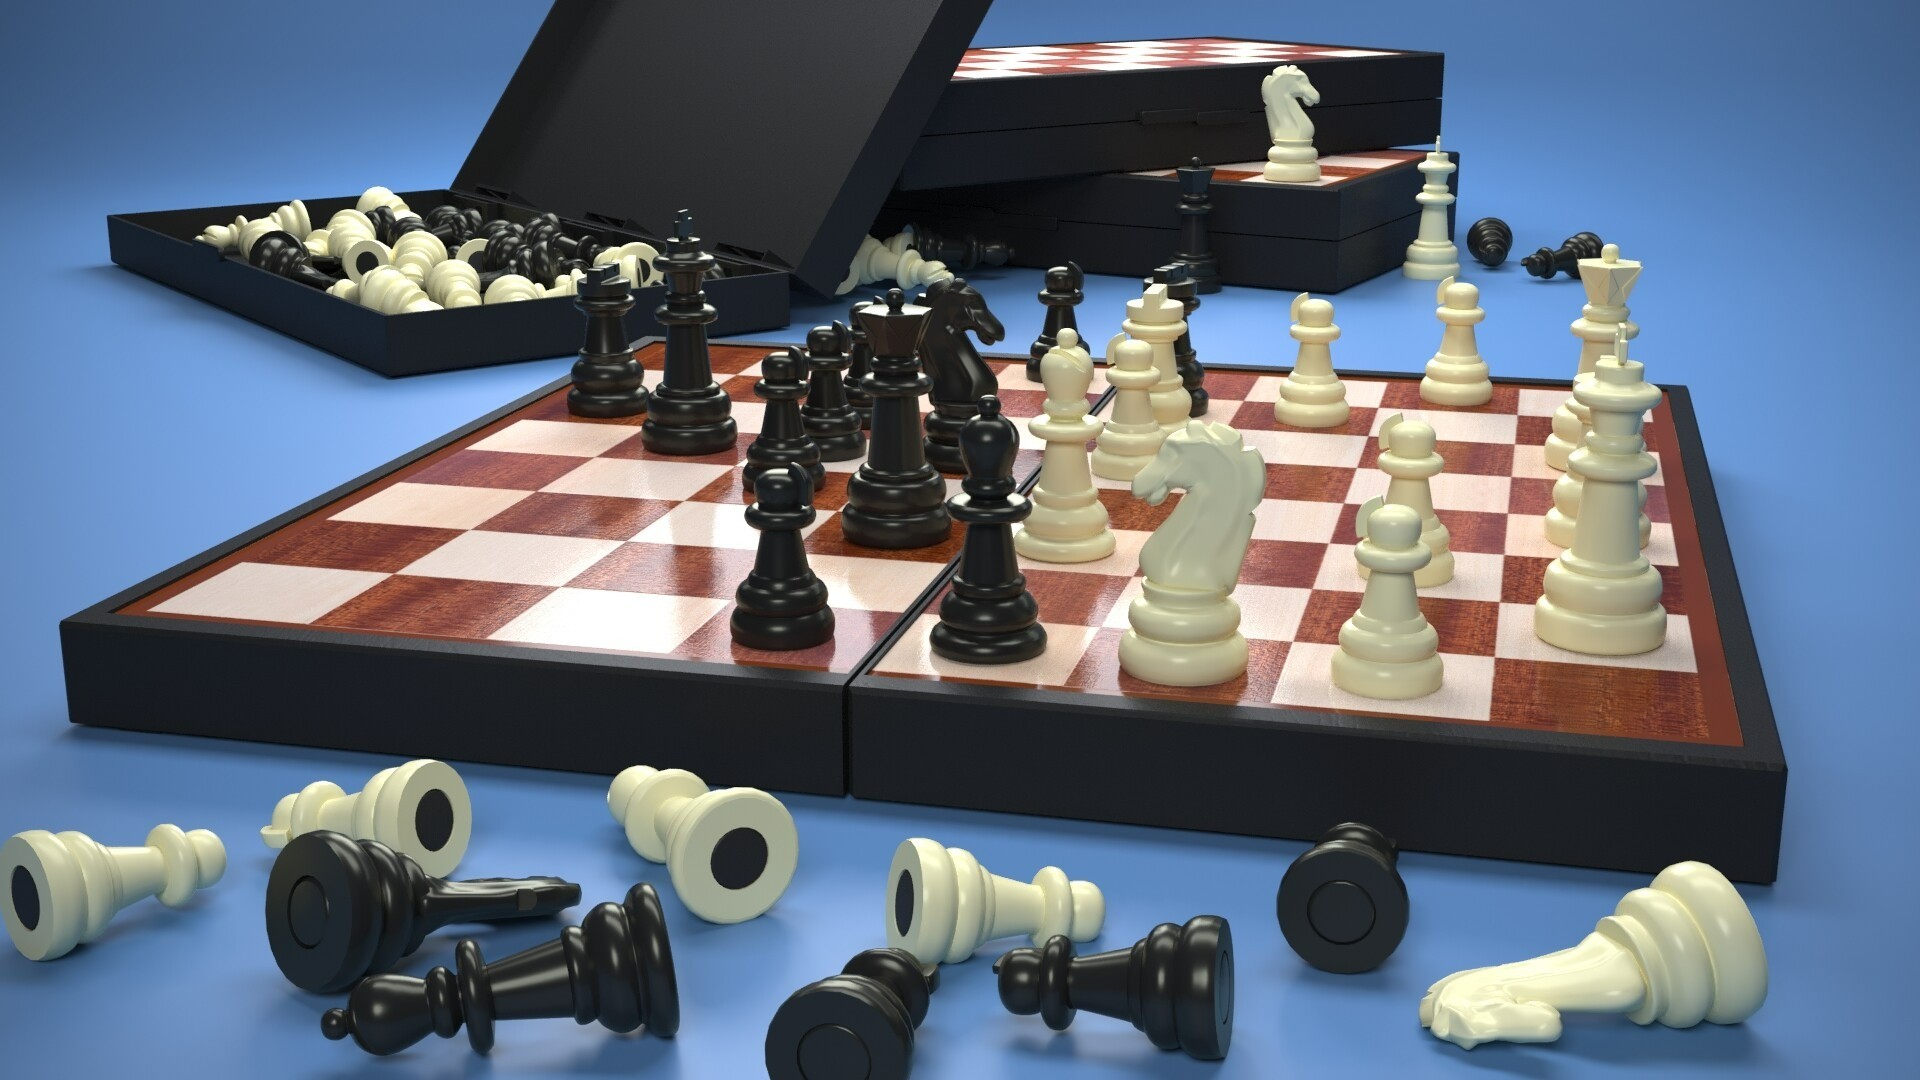 Robô quebra dedo de menino de 7 anos durante torneio de xadrez